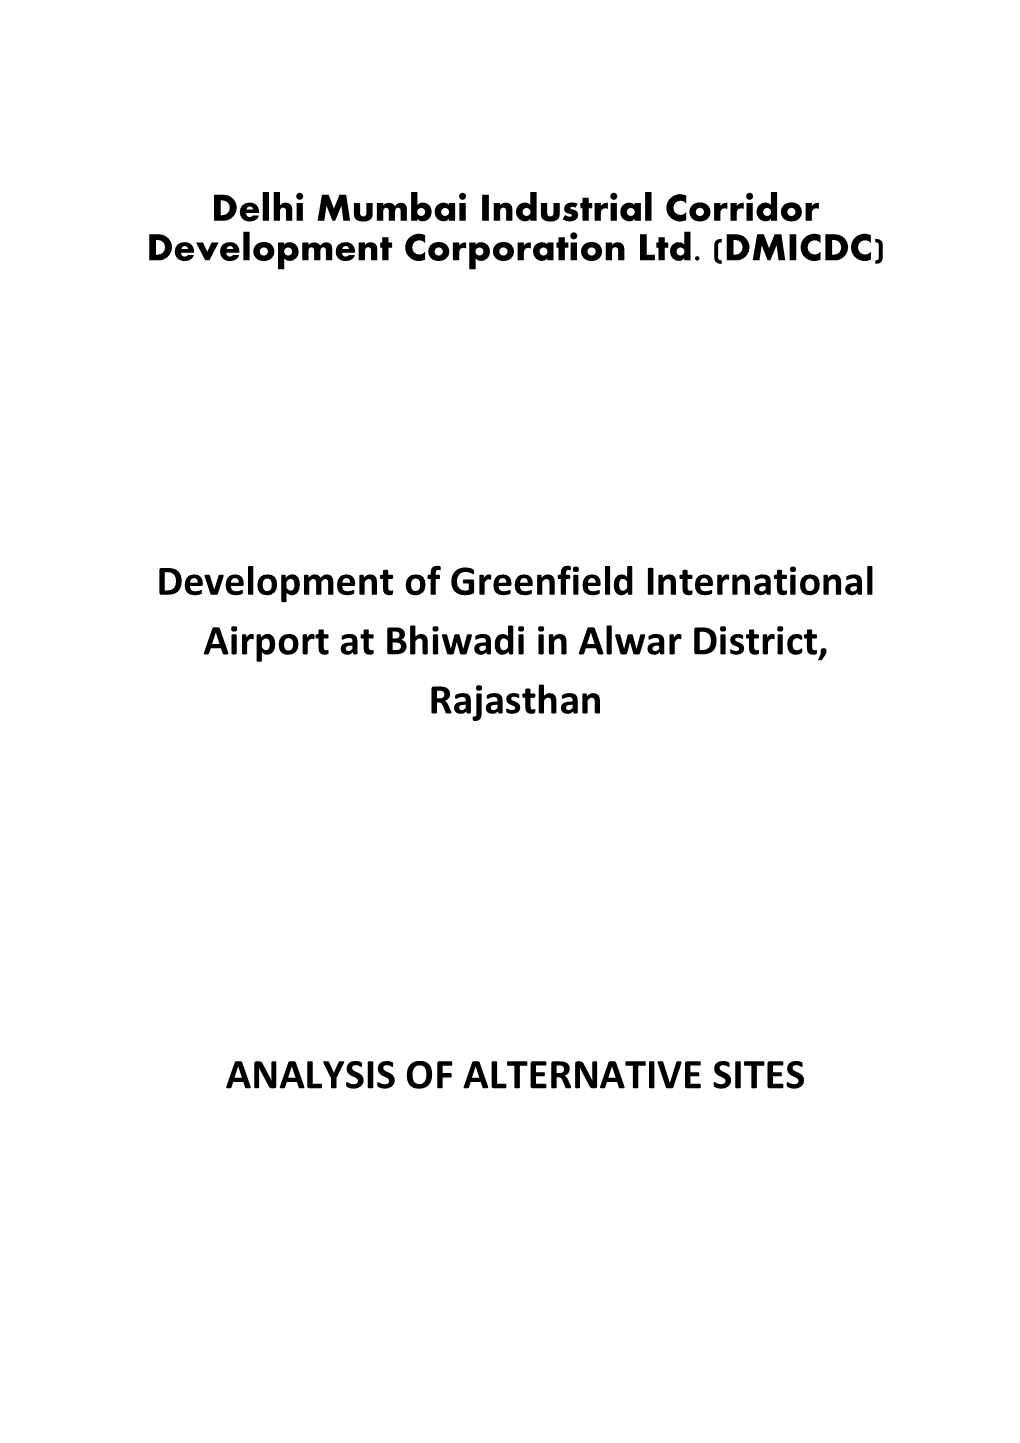 Development of Greenfield International Airport at Bhiwadi in Alwar District, Rajasthan